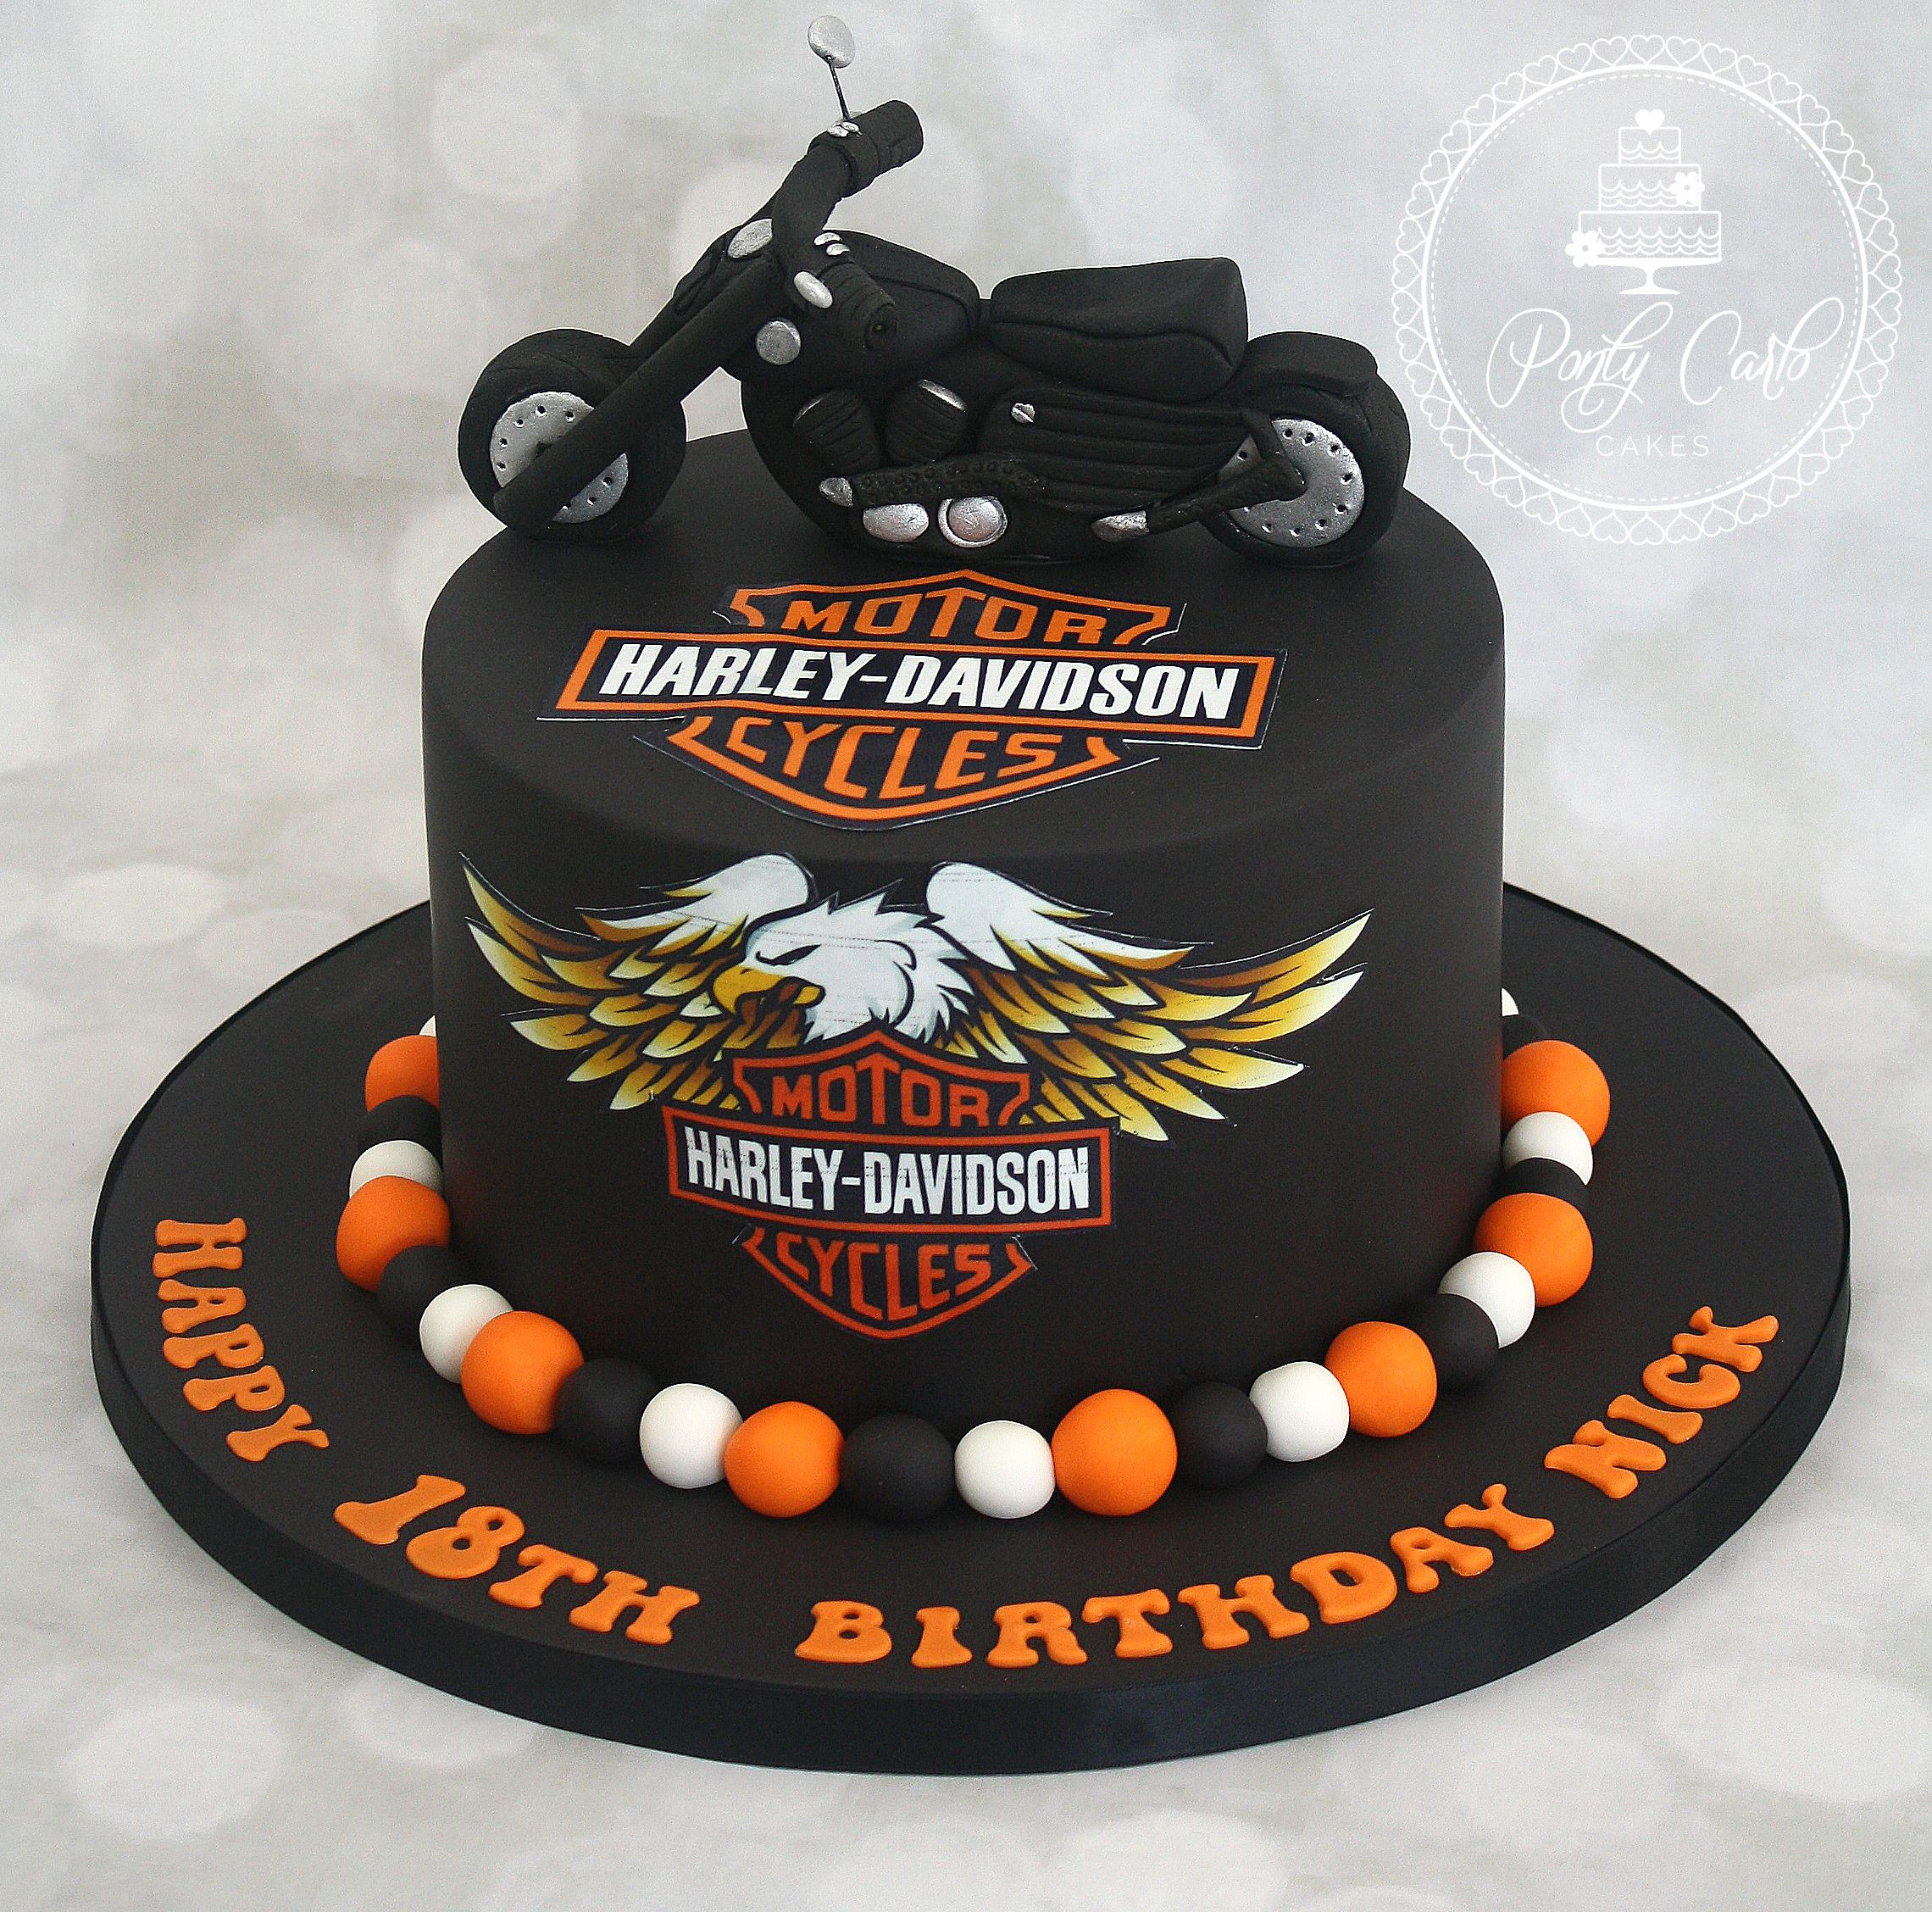 Harley Davidson Birthday Cake
 Ponty Carlo Cakes